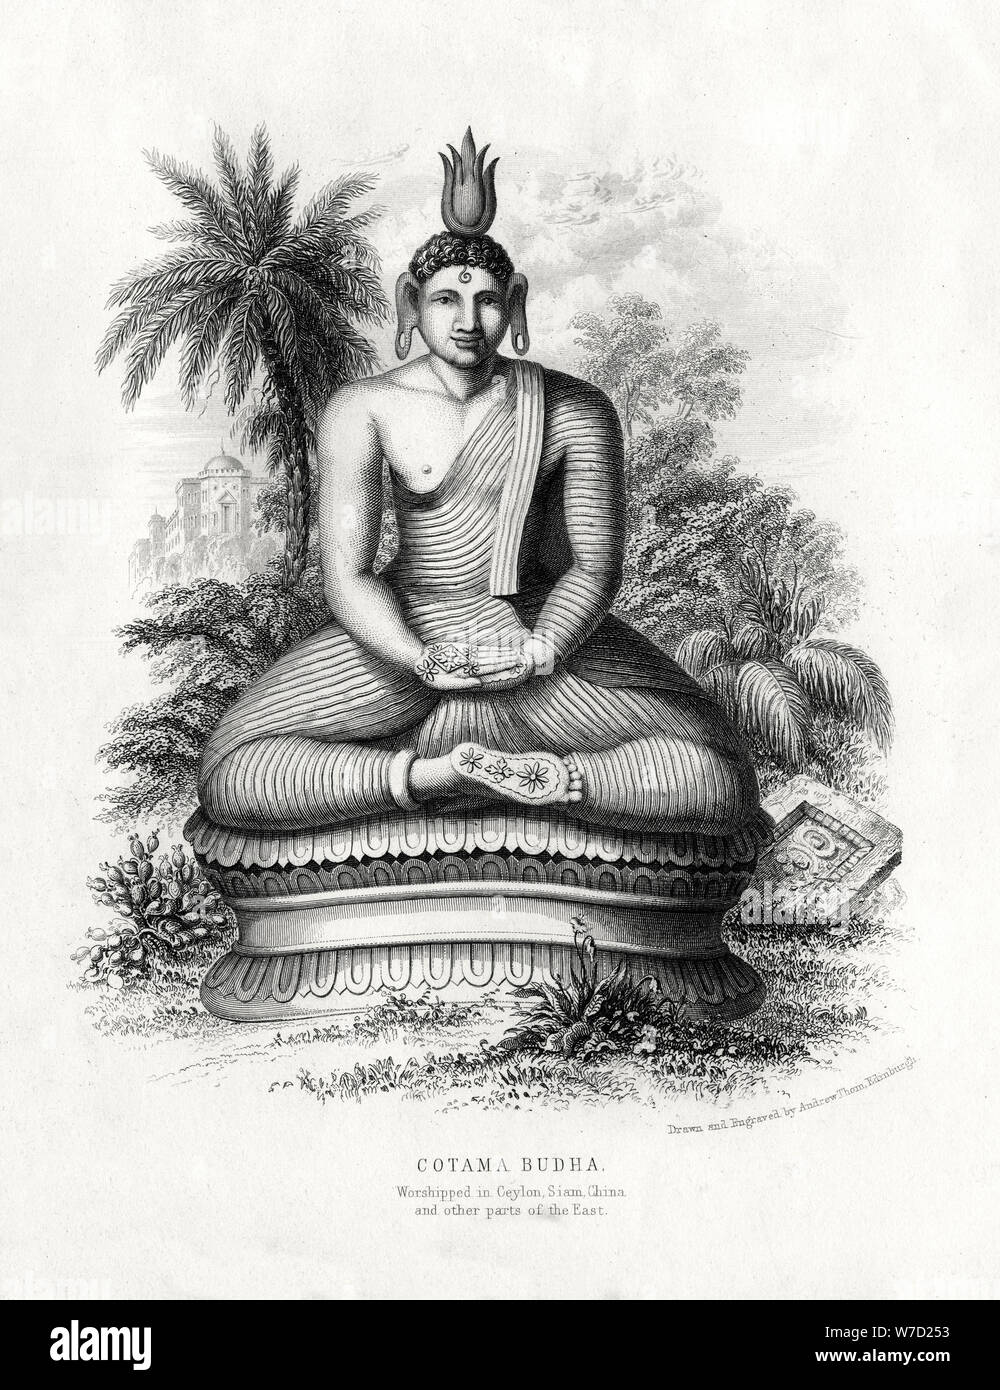 Cotoma Budha, worshipped in Ceylon, Siam, China, 19th century. Artist: Andrew Thom Stock Photo